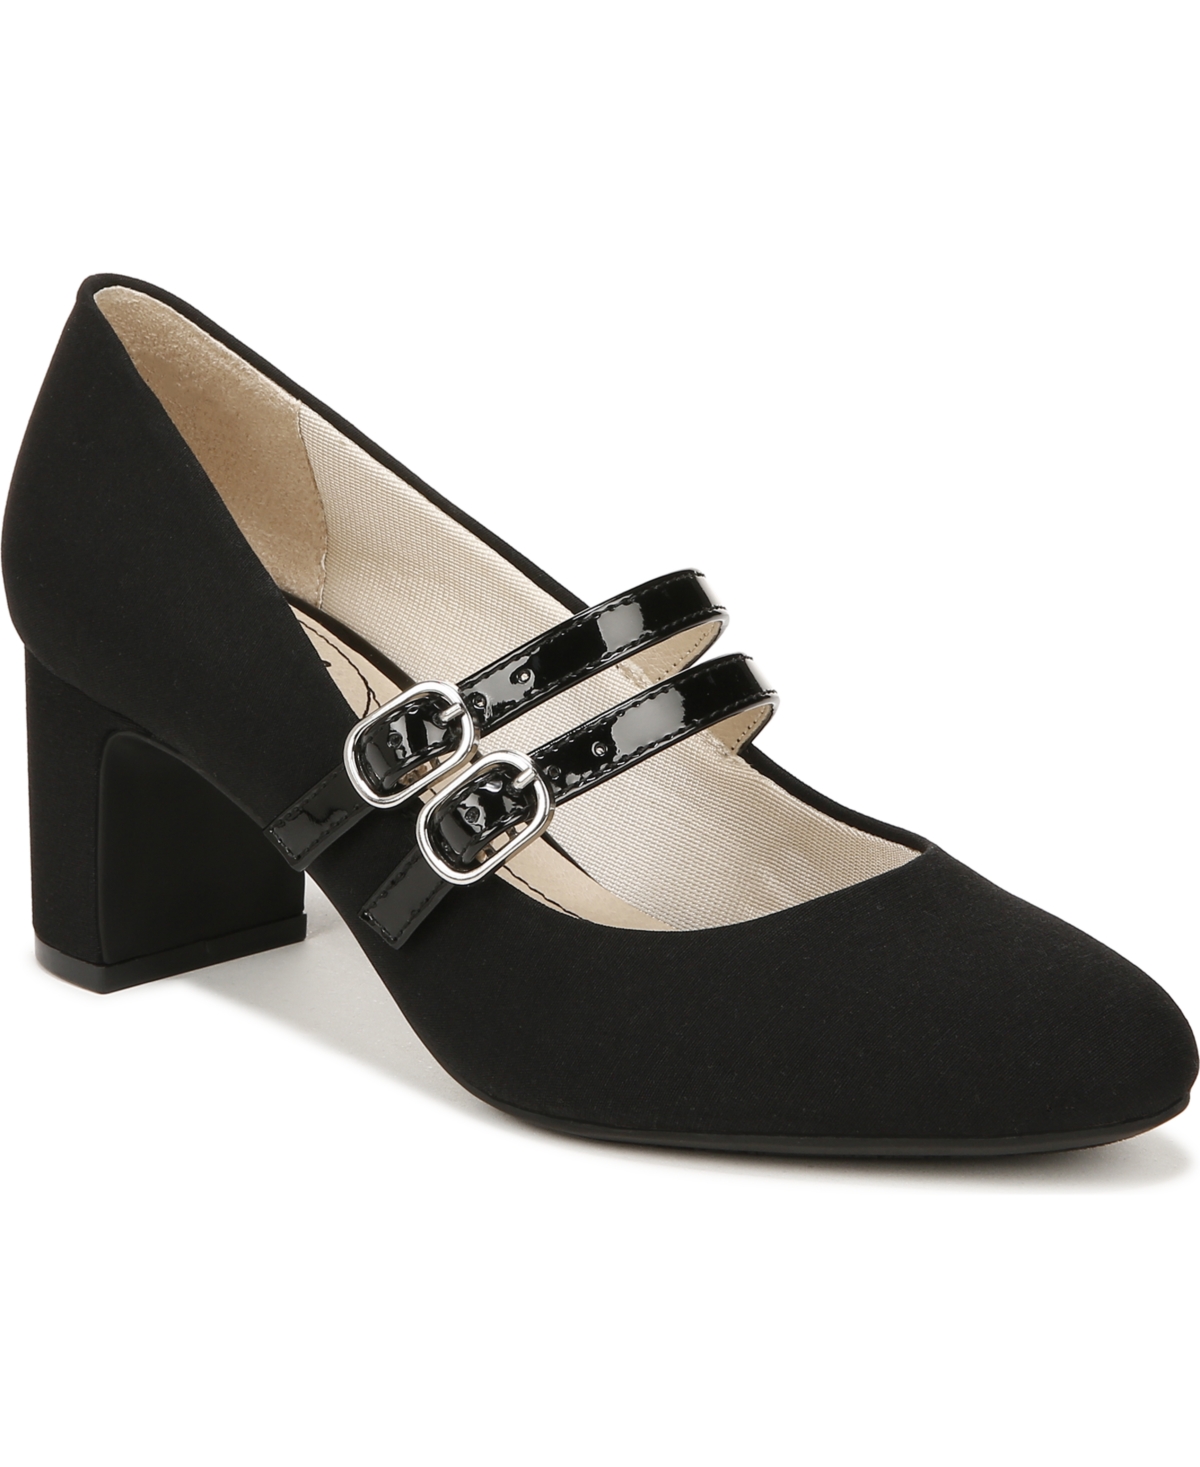 Retro Shoes – Women’s Heels, Flats & Sneakers LifeStride True Mary Jane Pumps - Black Micron $55.99 AT vintagedancer.com